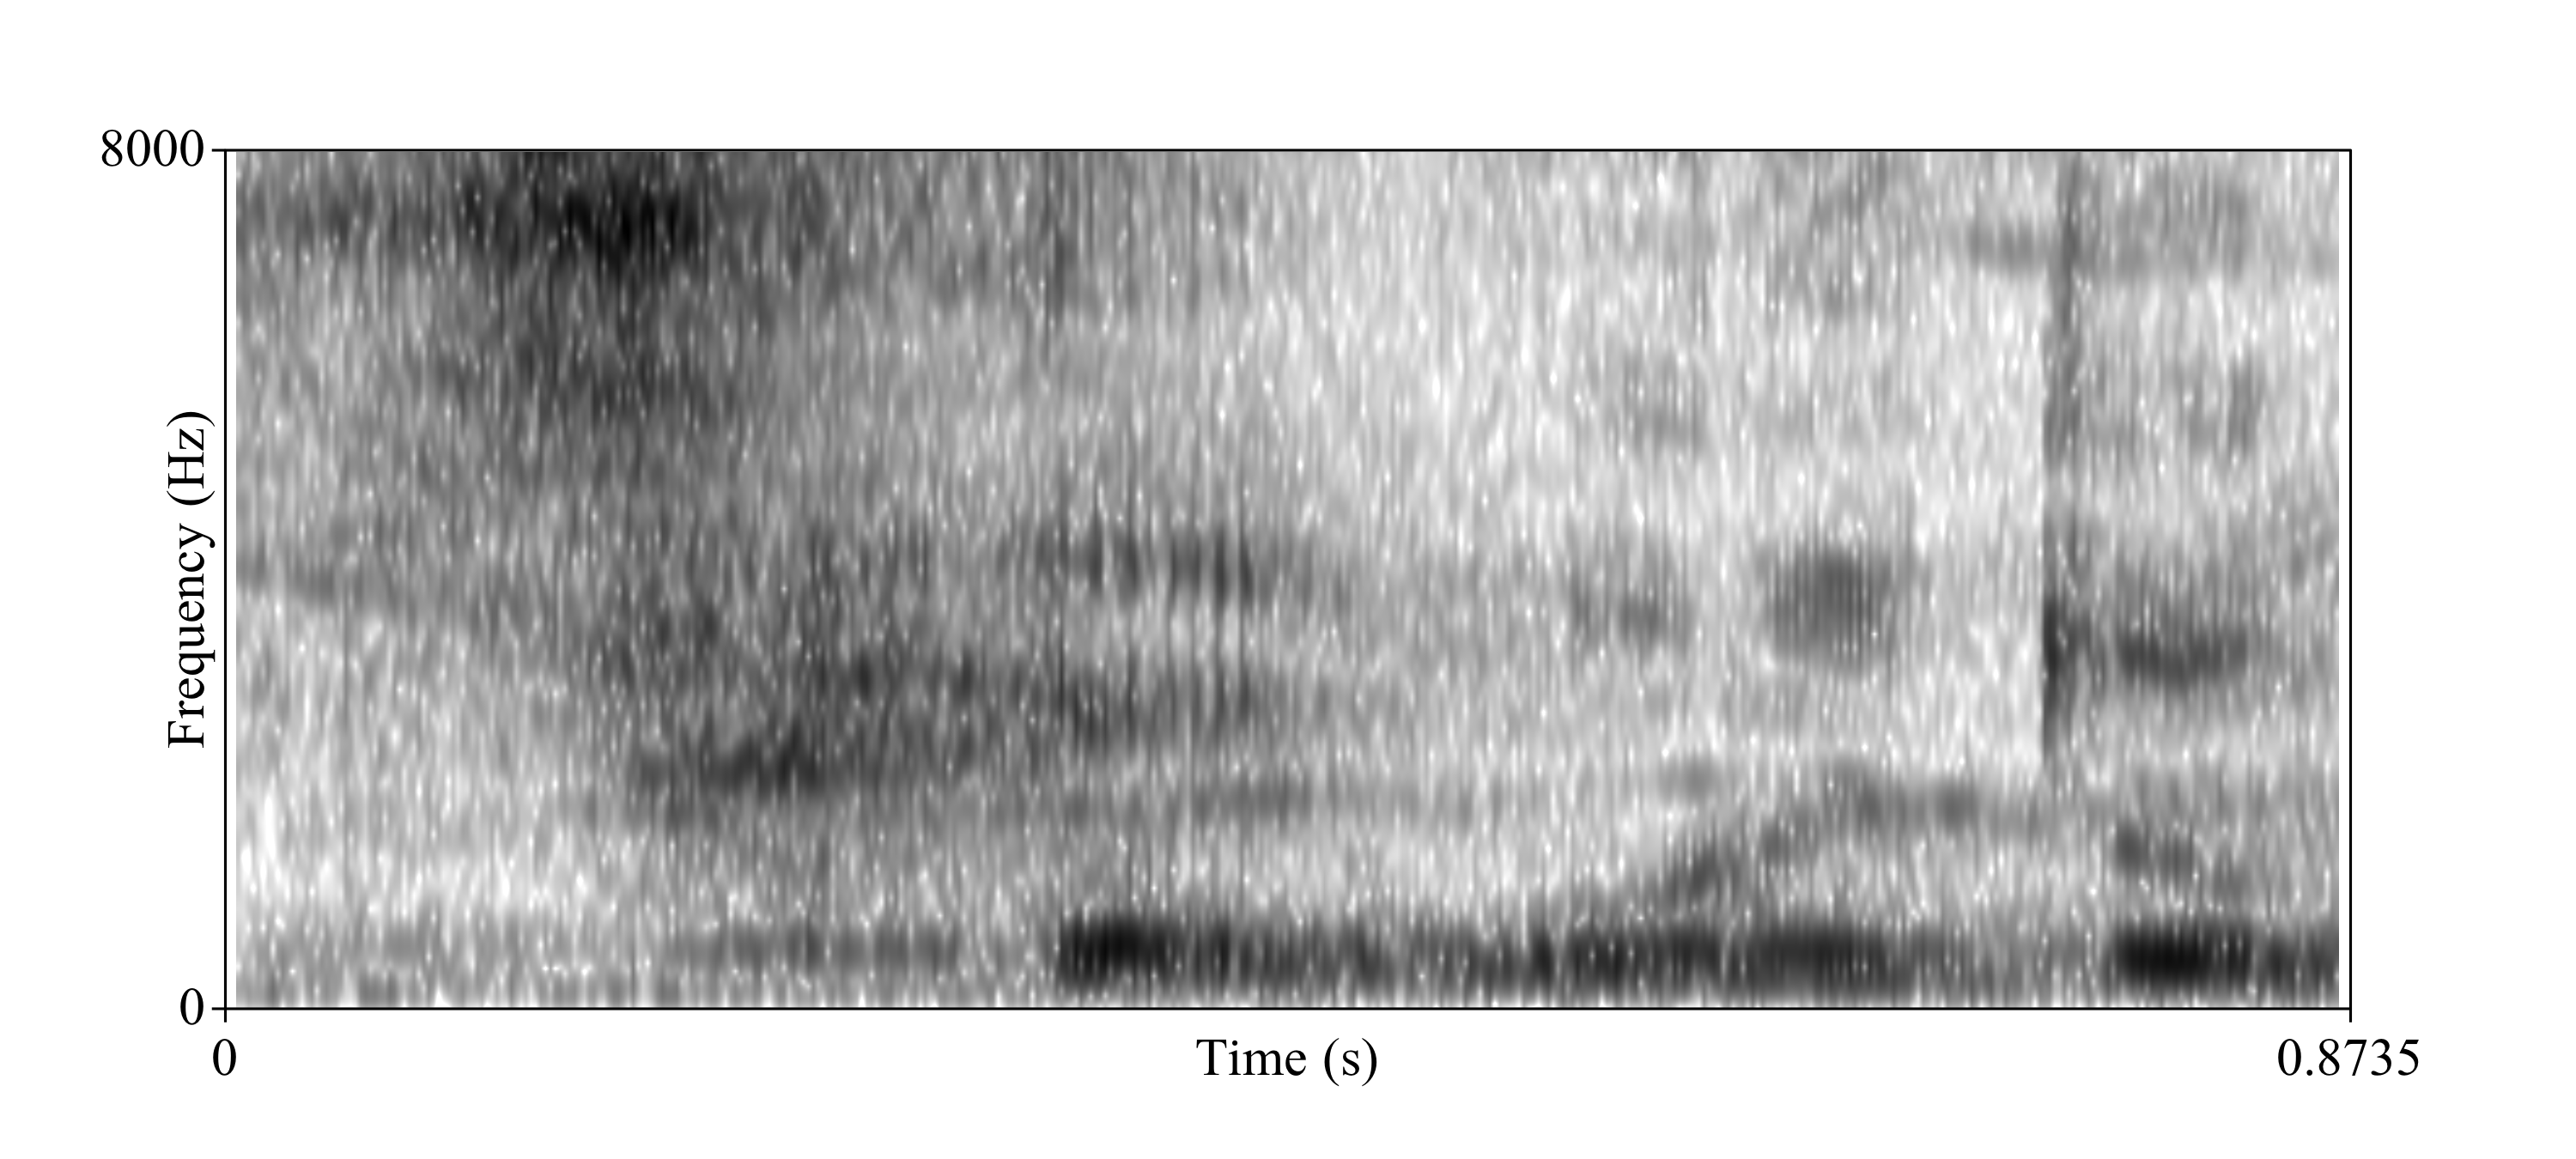 A lovely spectrogram